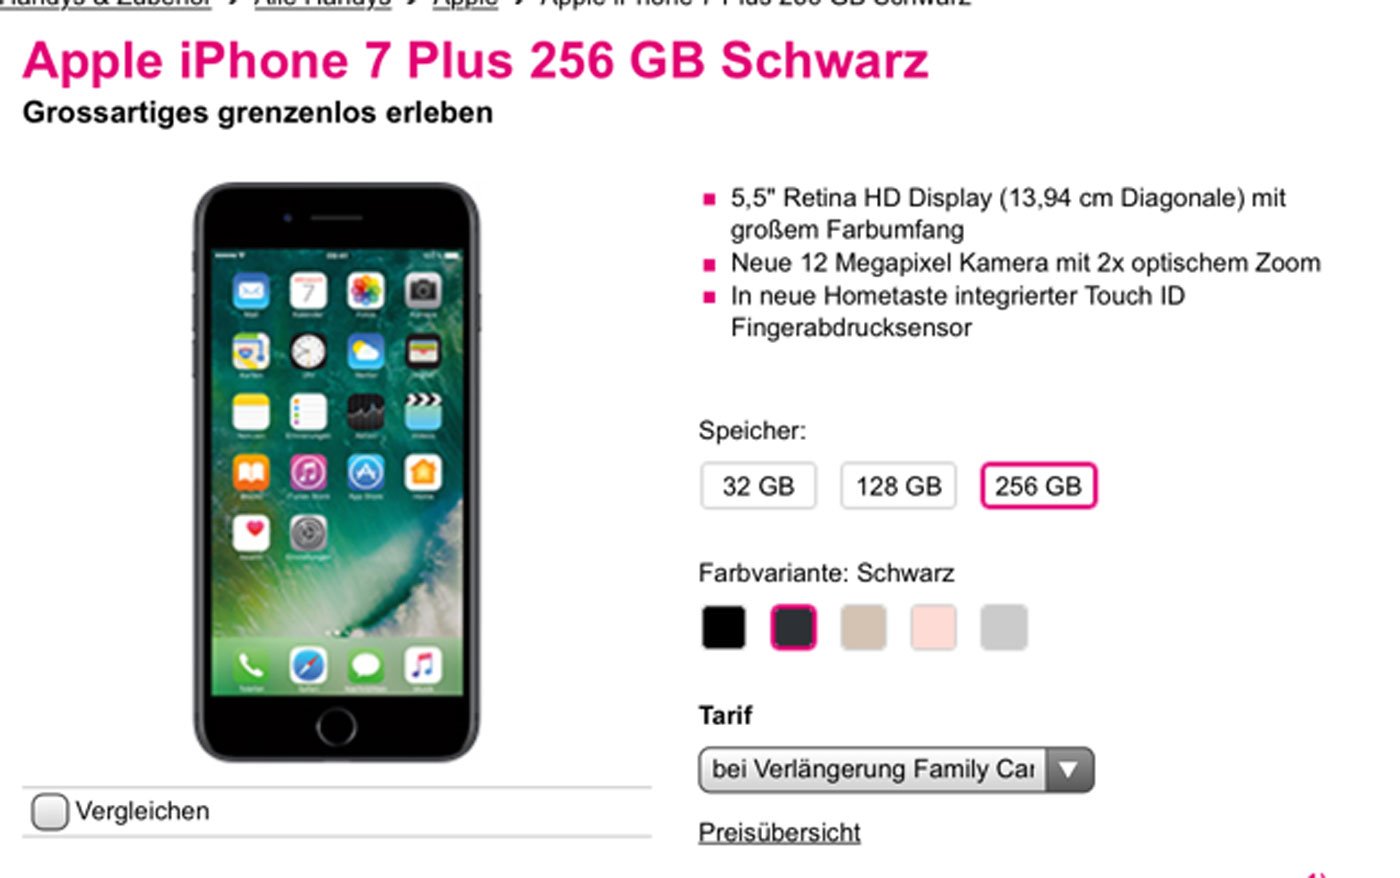 iPhone 7 Vertragsverlängerung (VVL) bei Telekom bereits möglich! 5